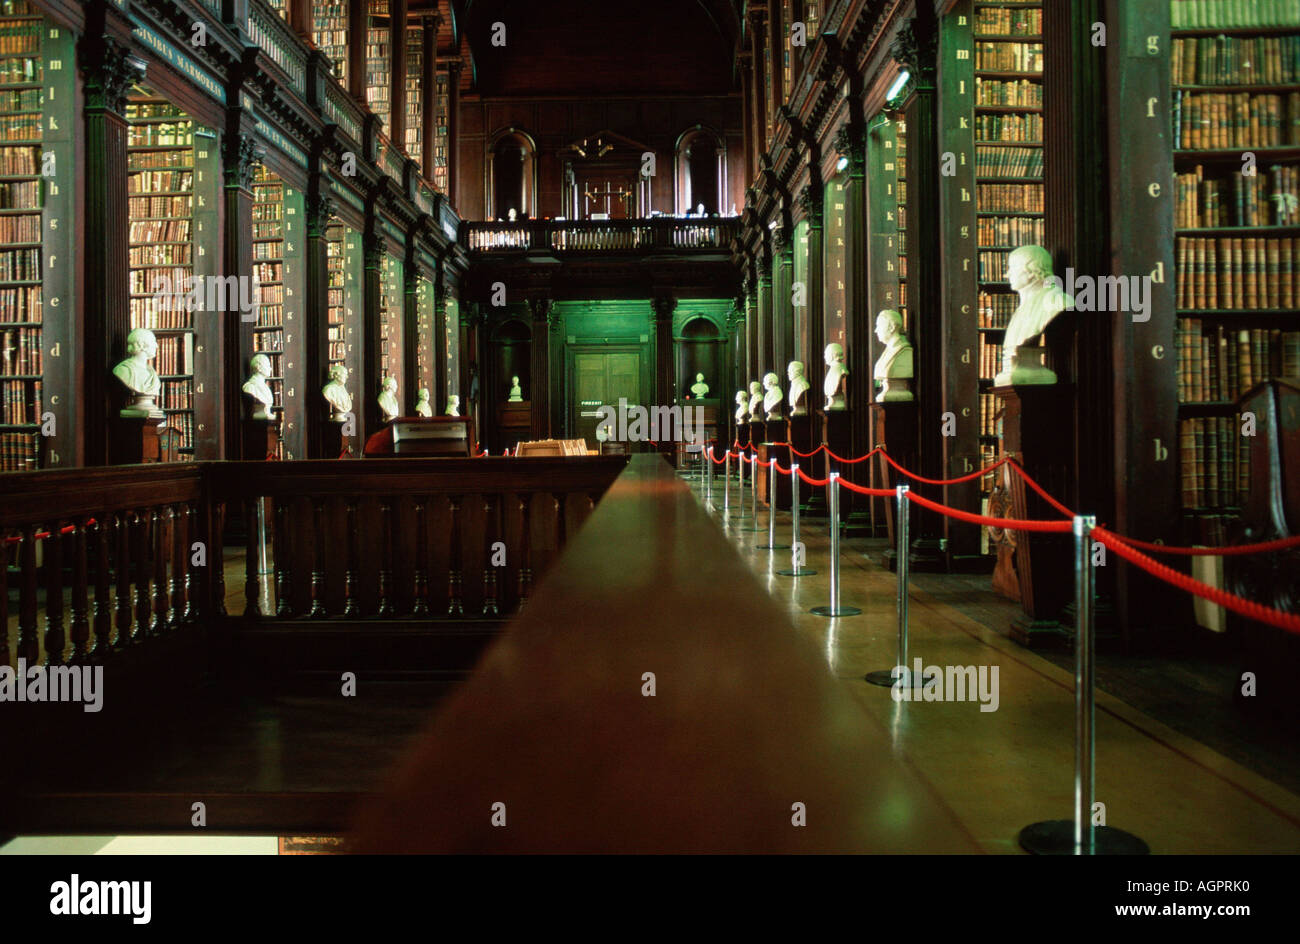 Biblioteca / Dublin / Bibliothek Foto Stock